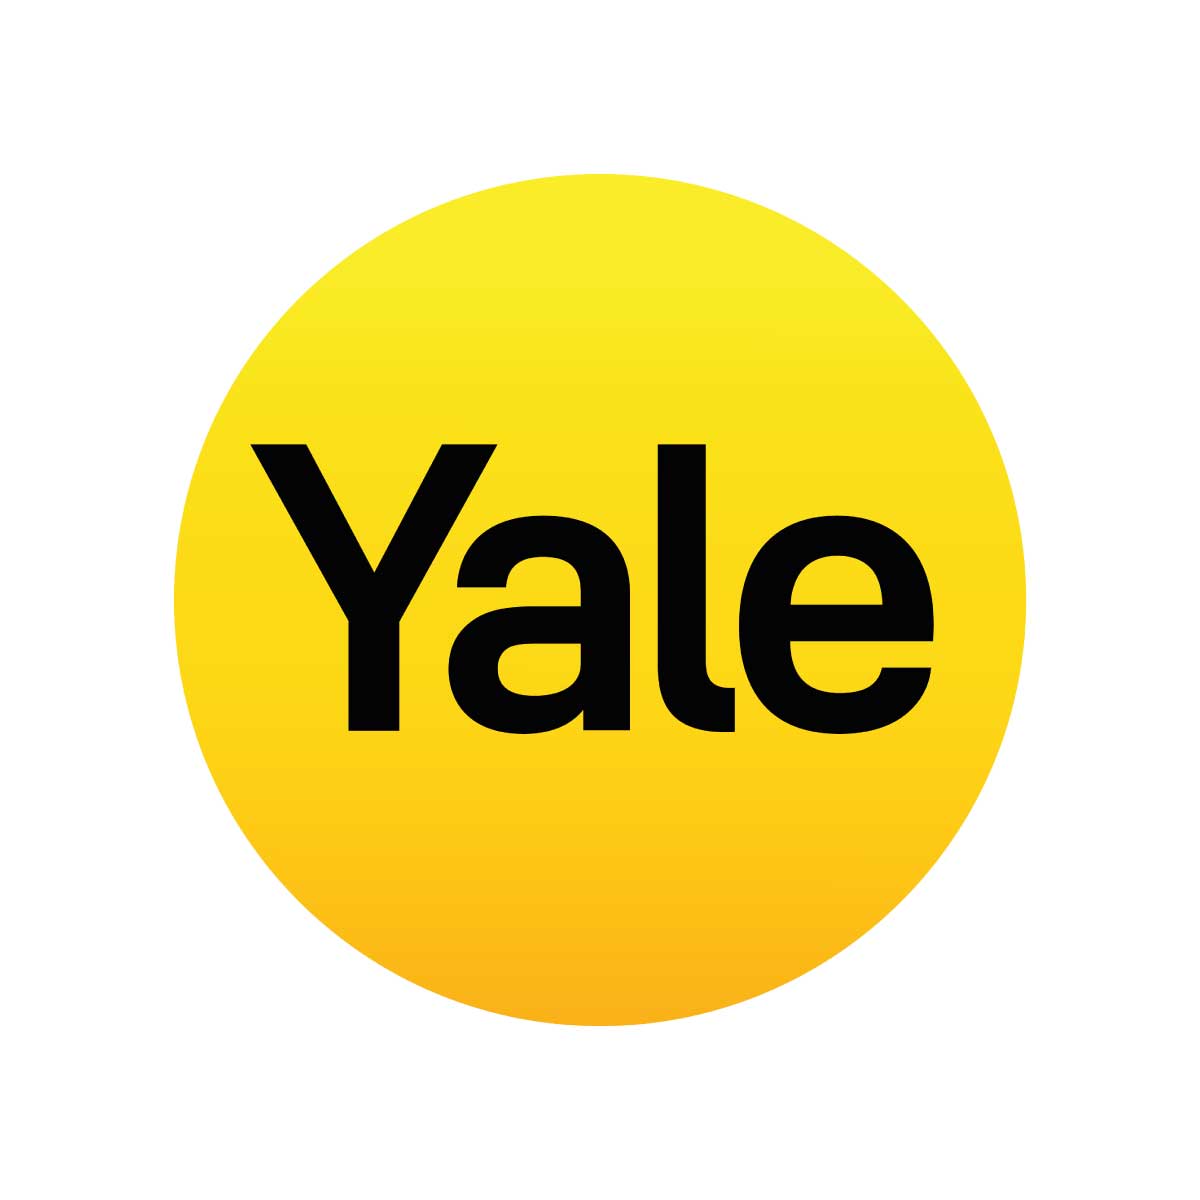 Yale Partnership Announcement Image